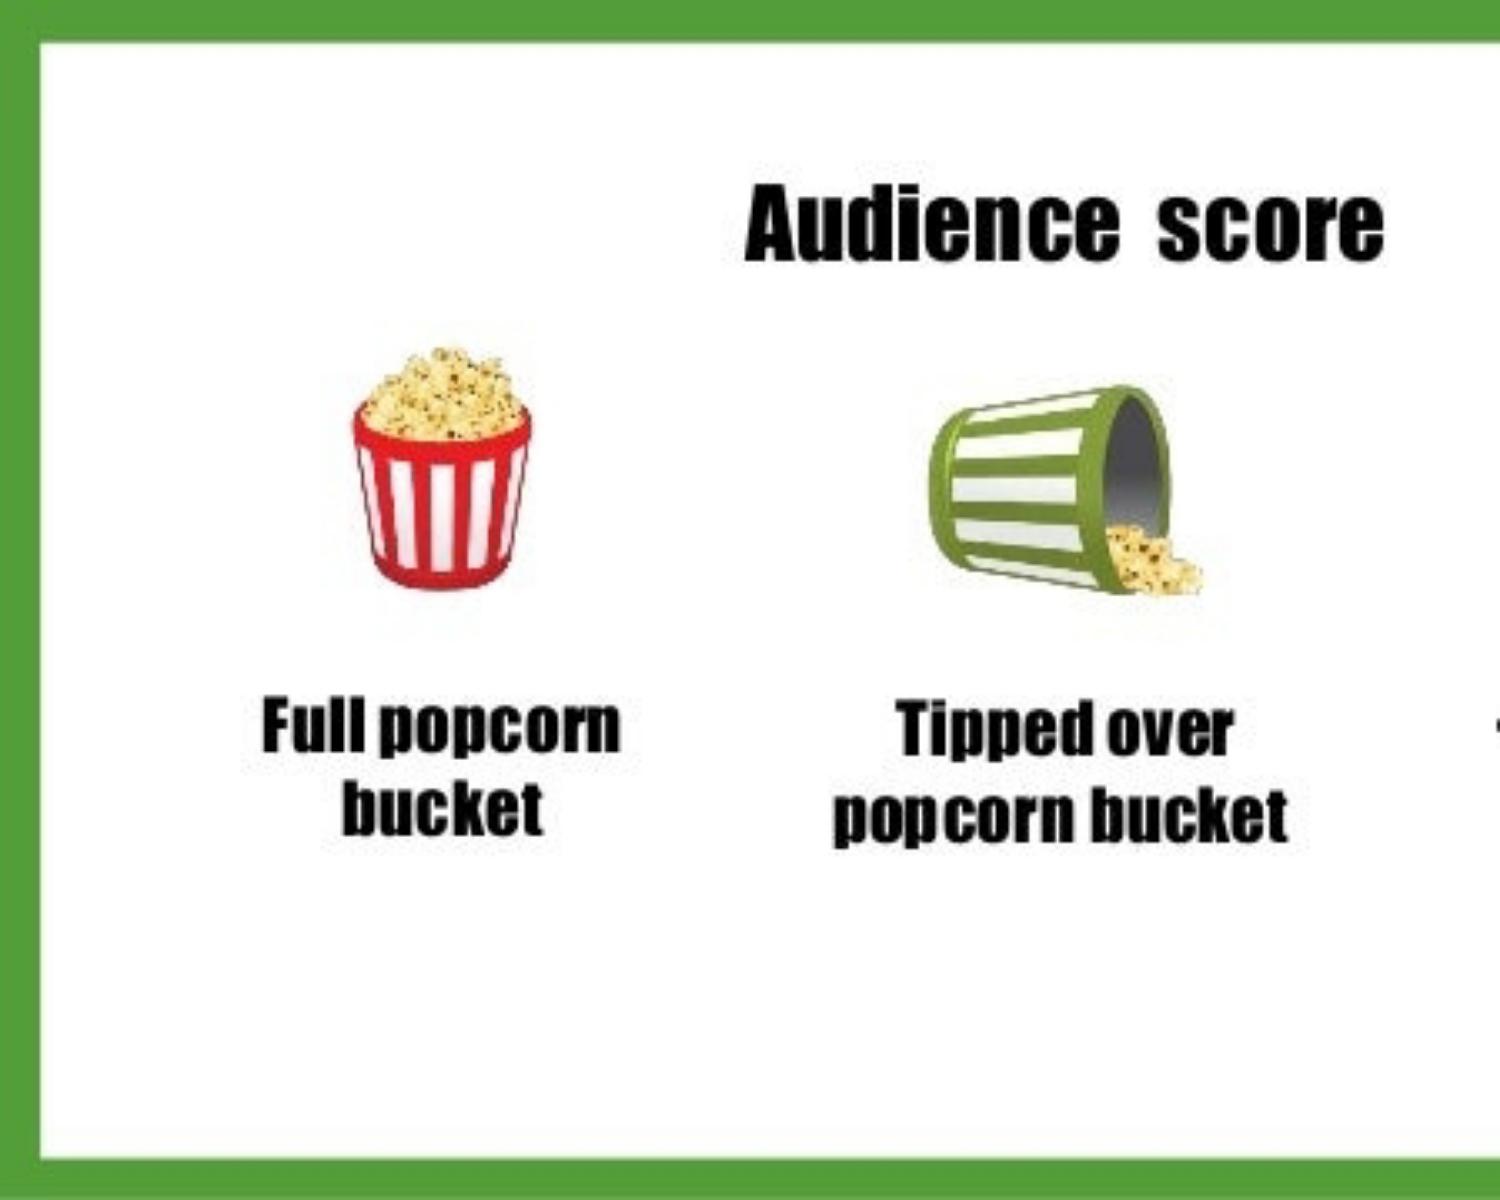 The Popcorn Buckets